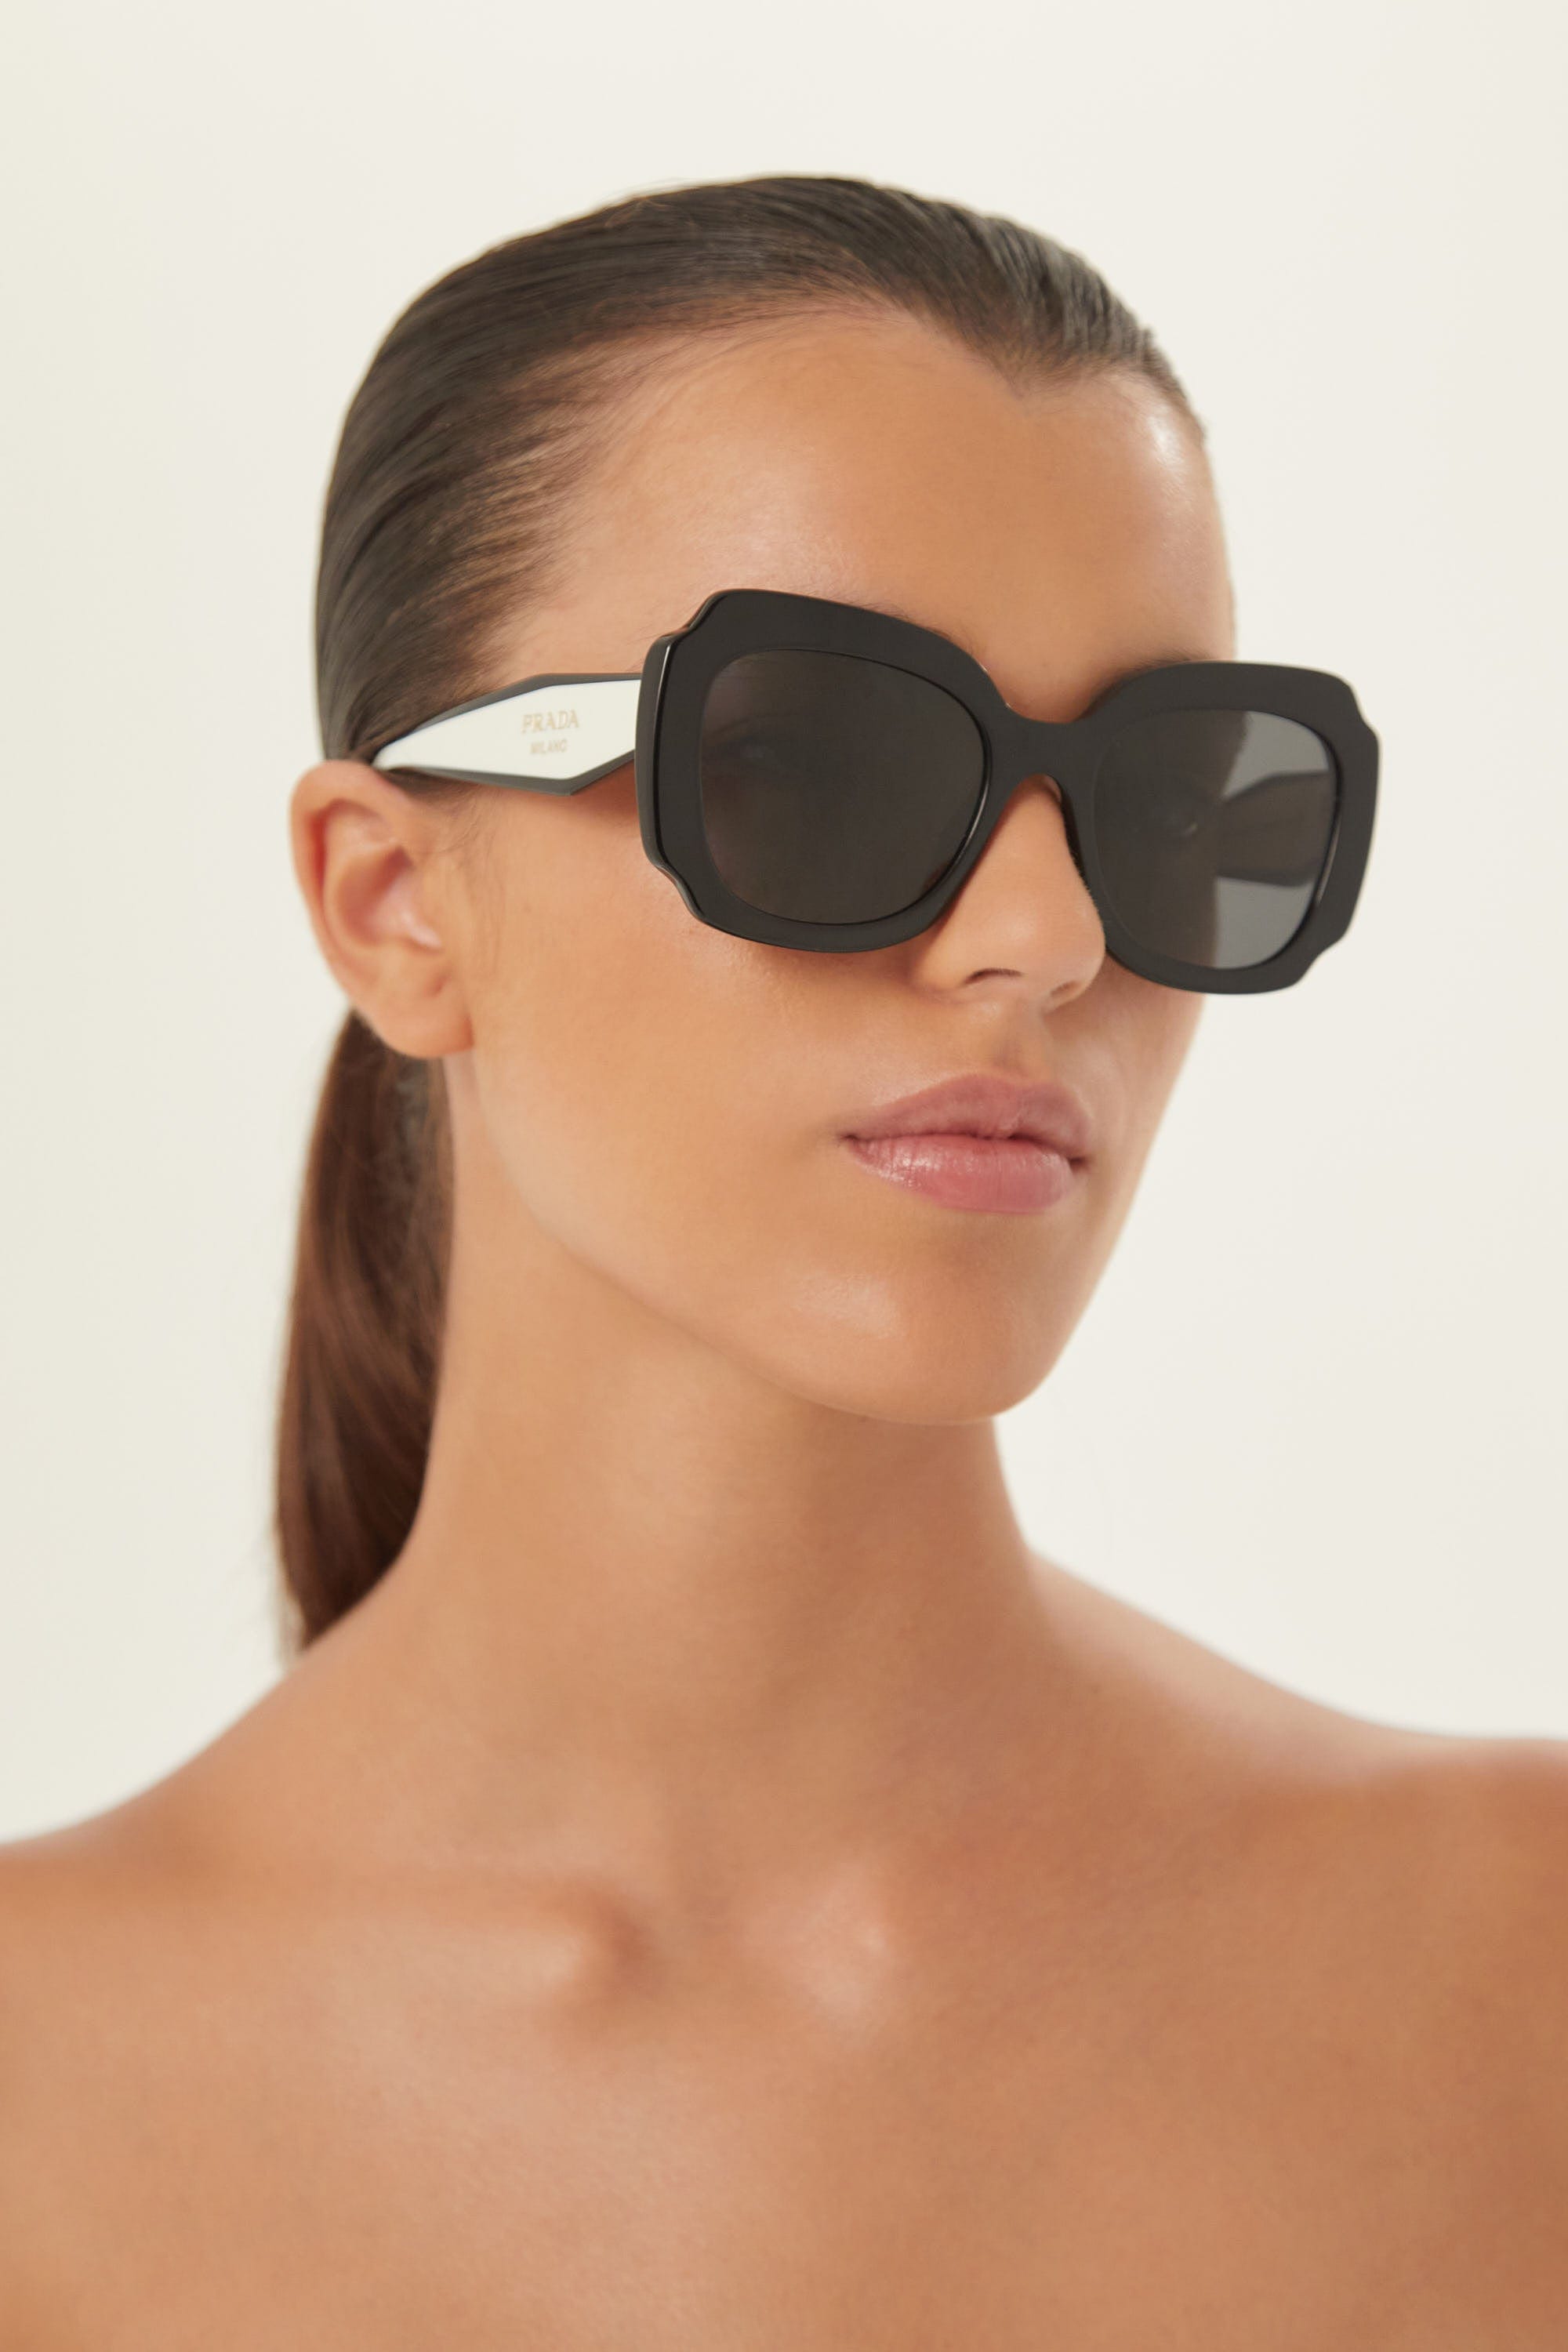 Prada butterfly black and white sunglasses - Eyewear Club